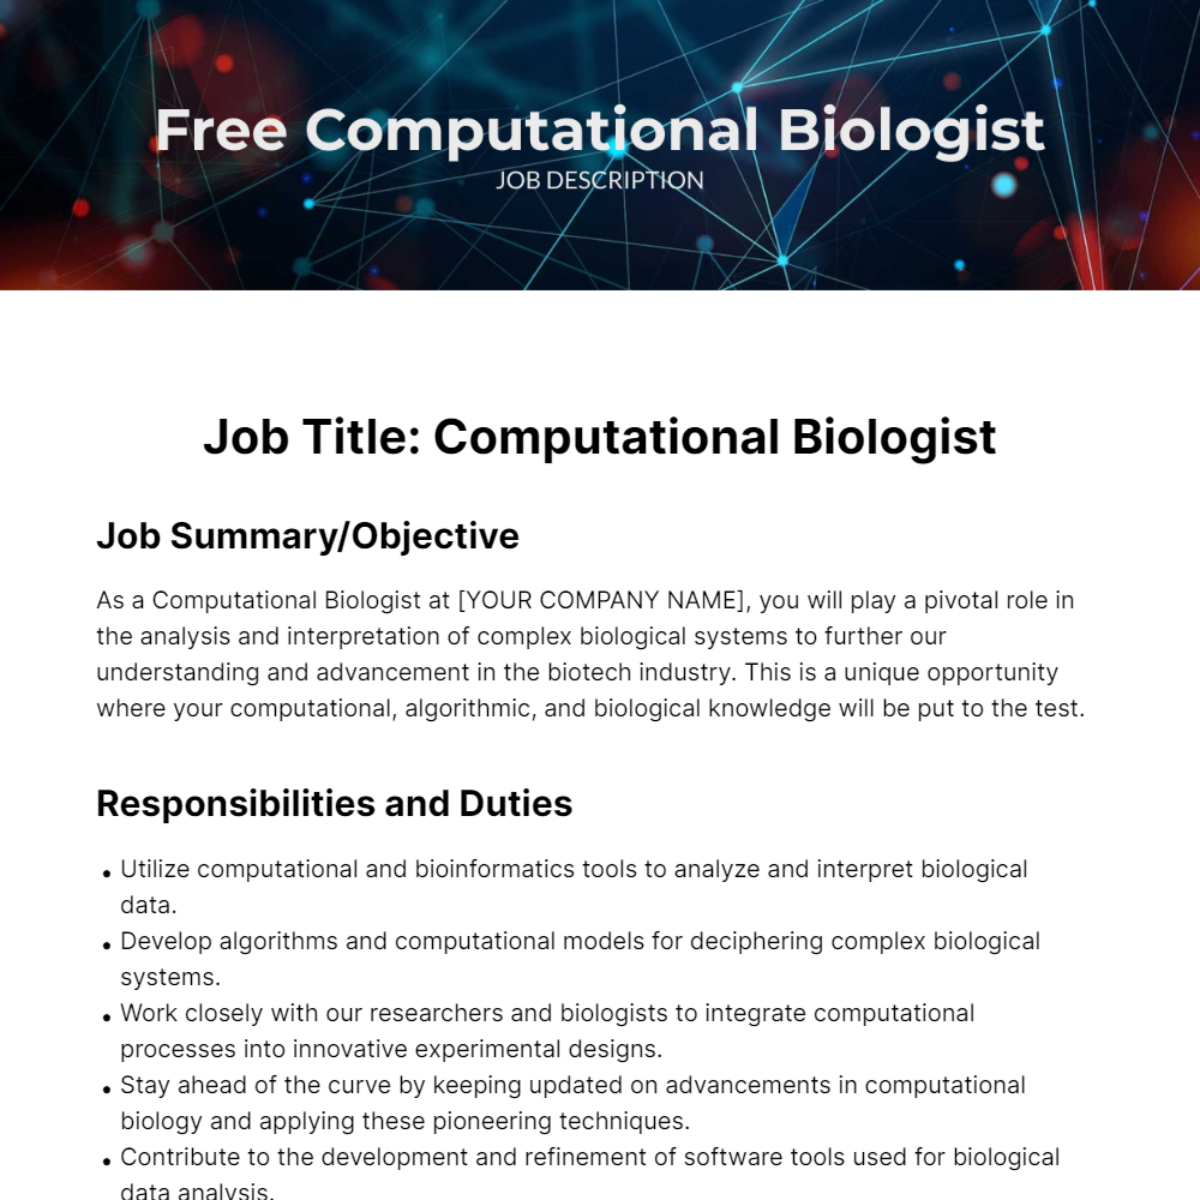 Free Computational Biologist Job Description Template